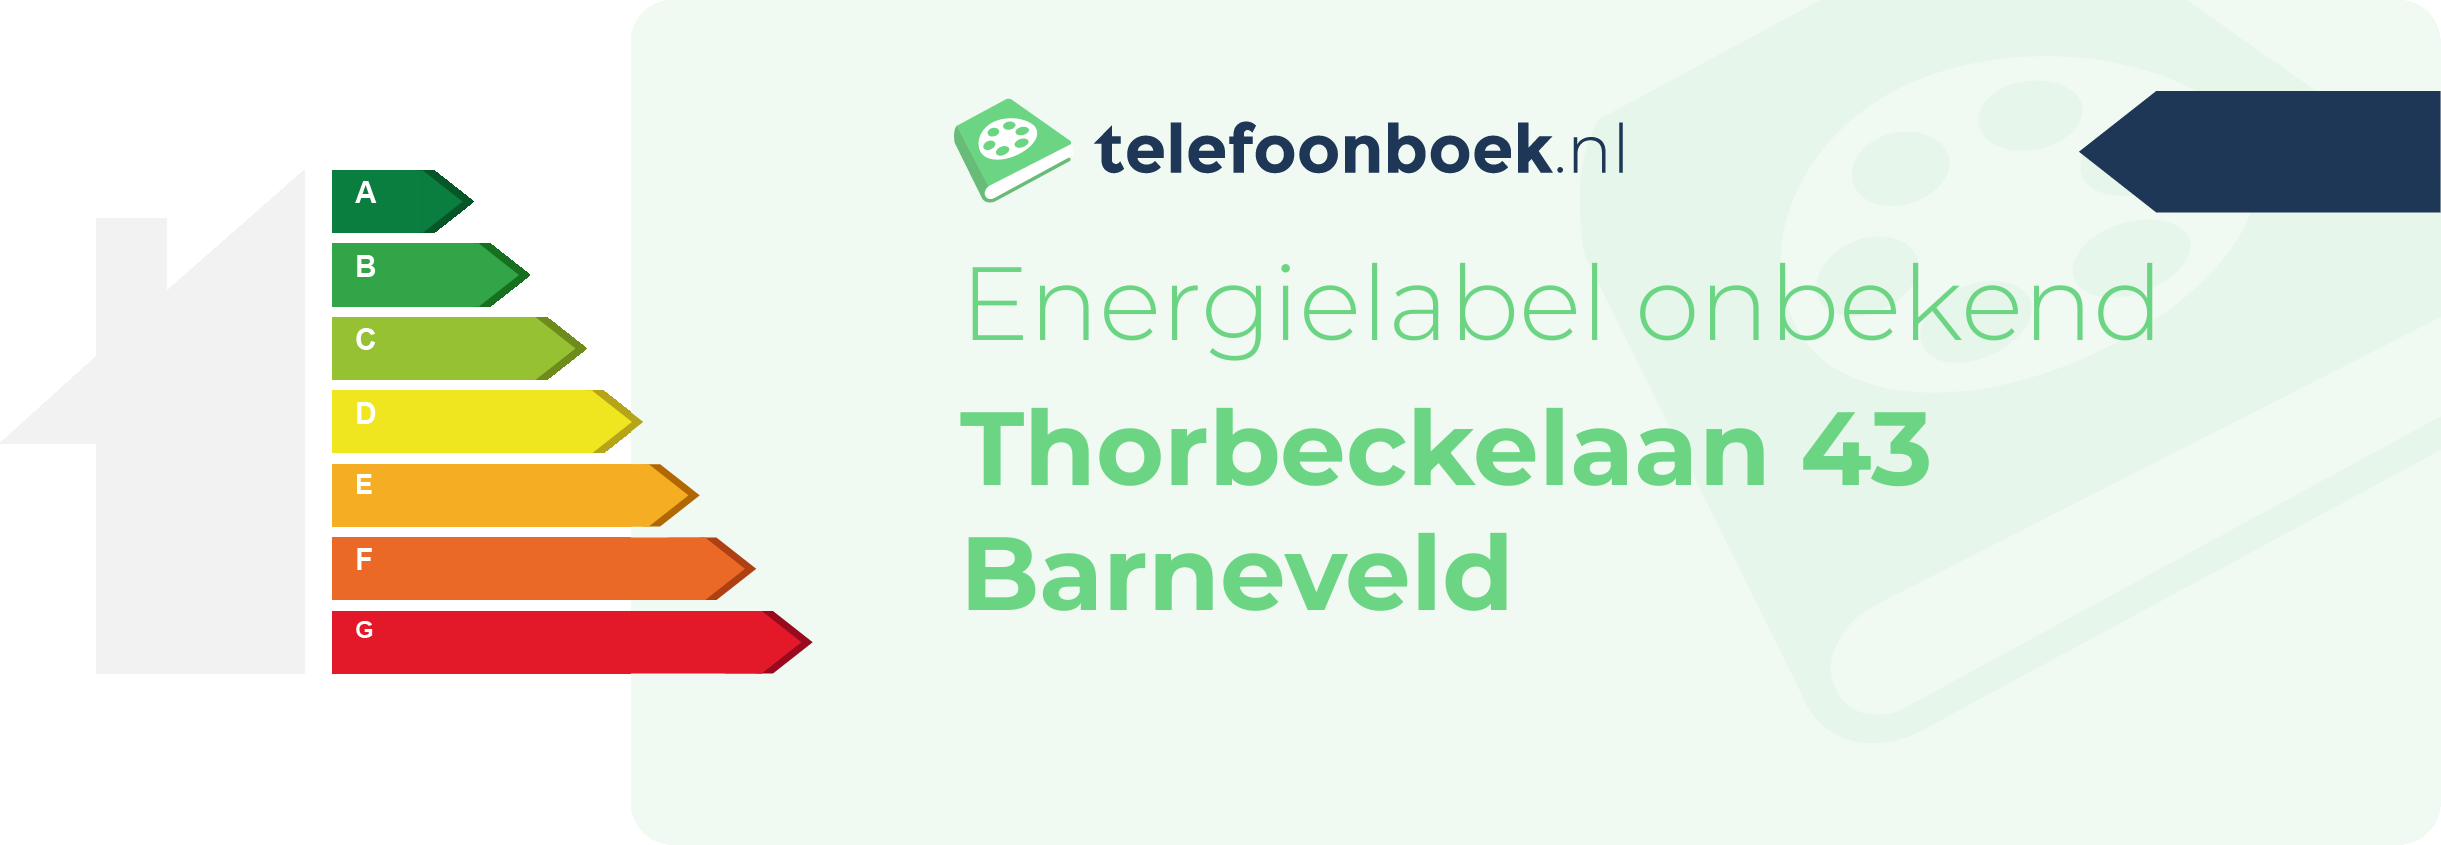 Energielabel Thorbeckelaan 43 Barneveld